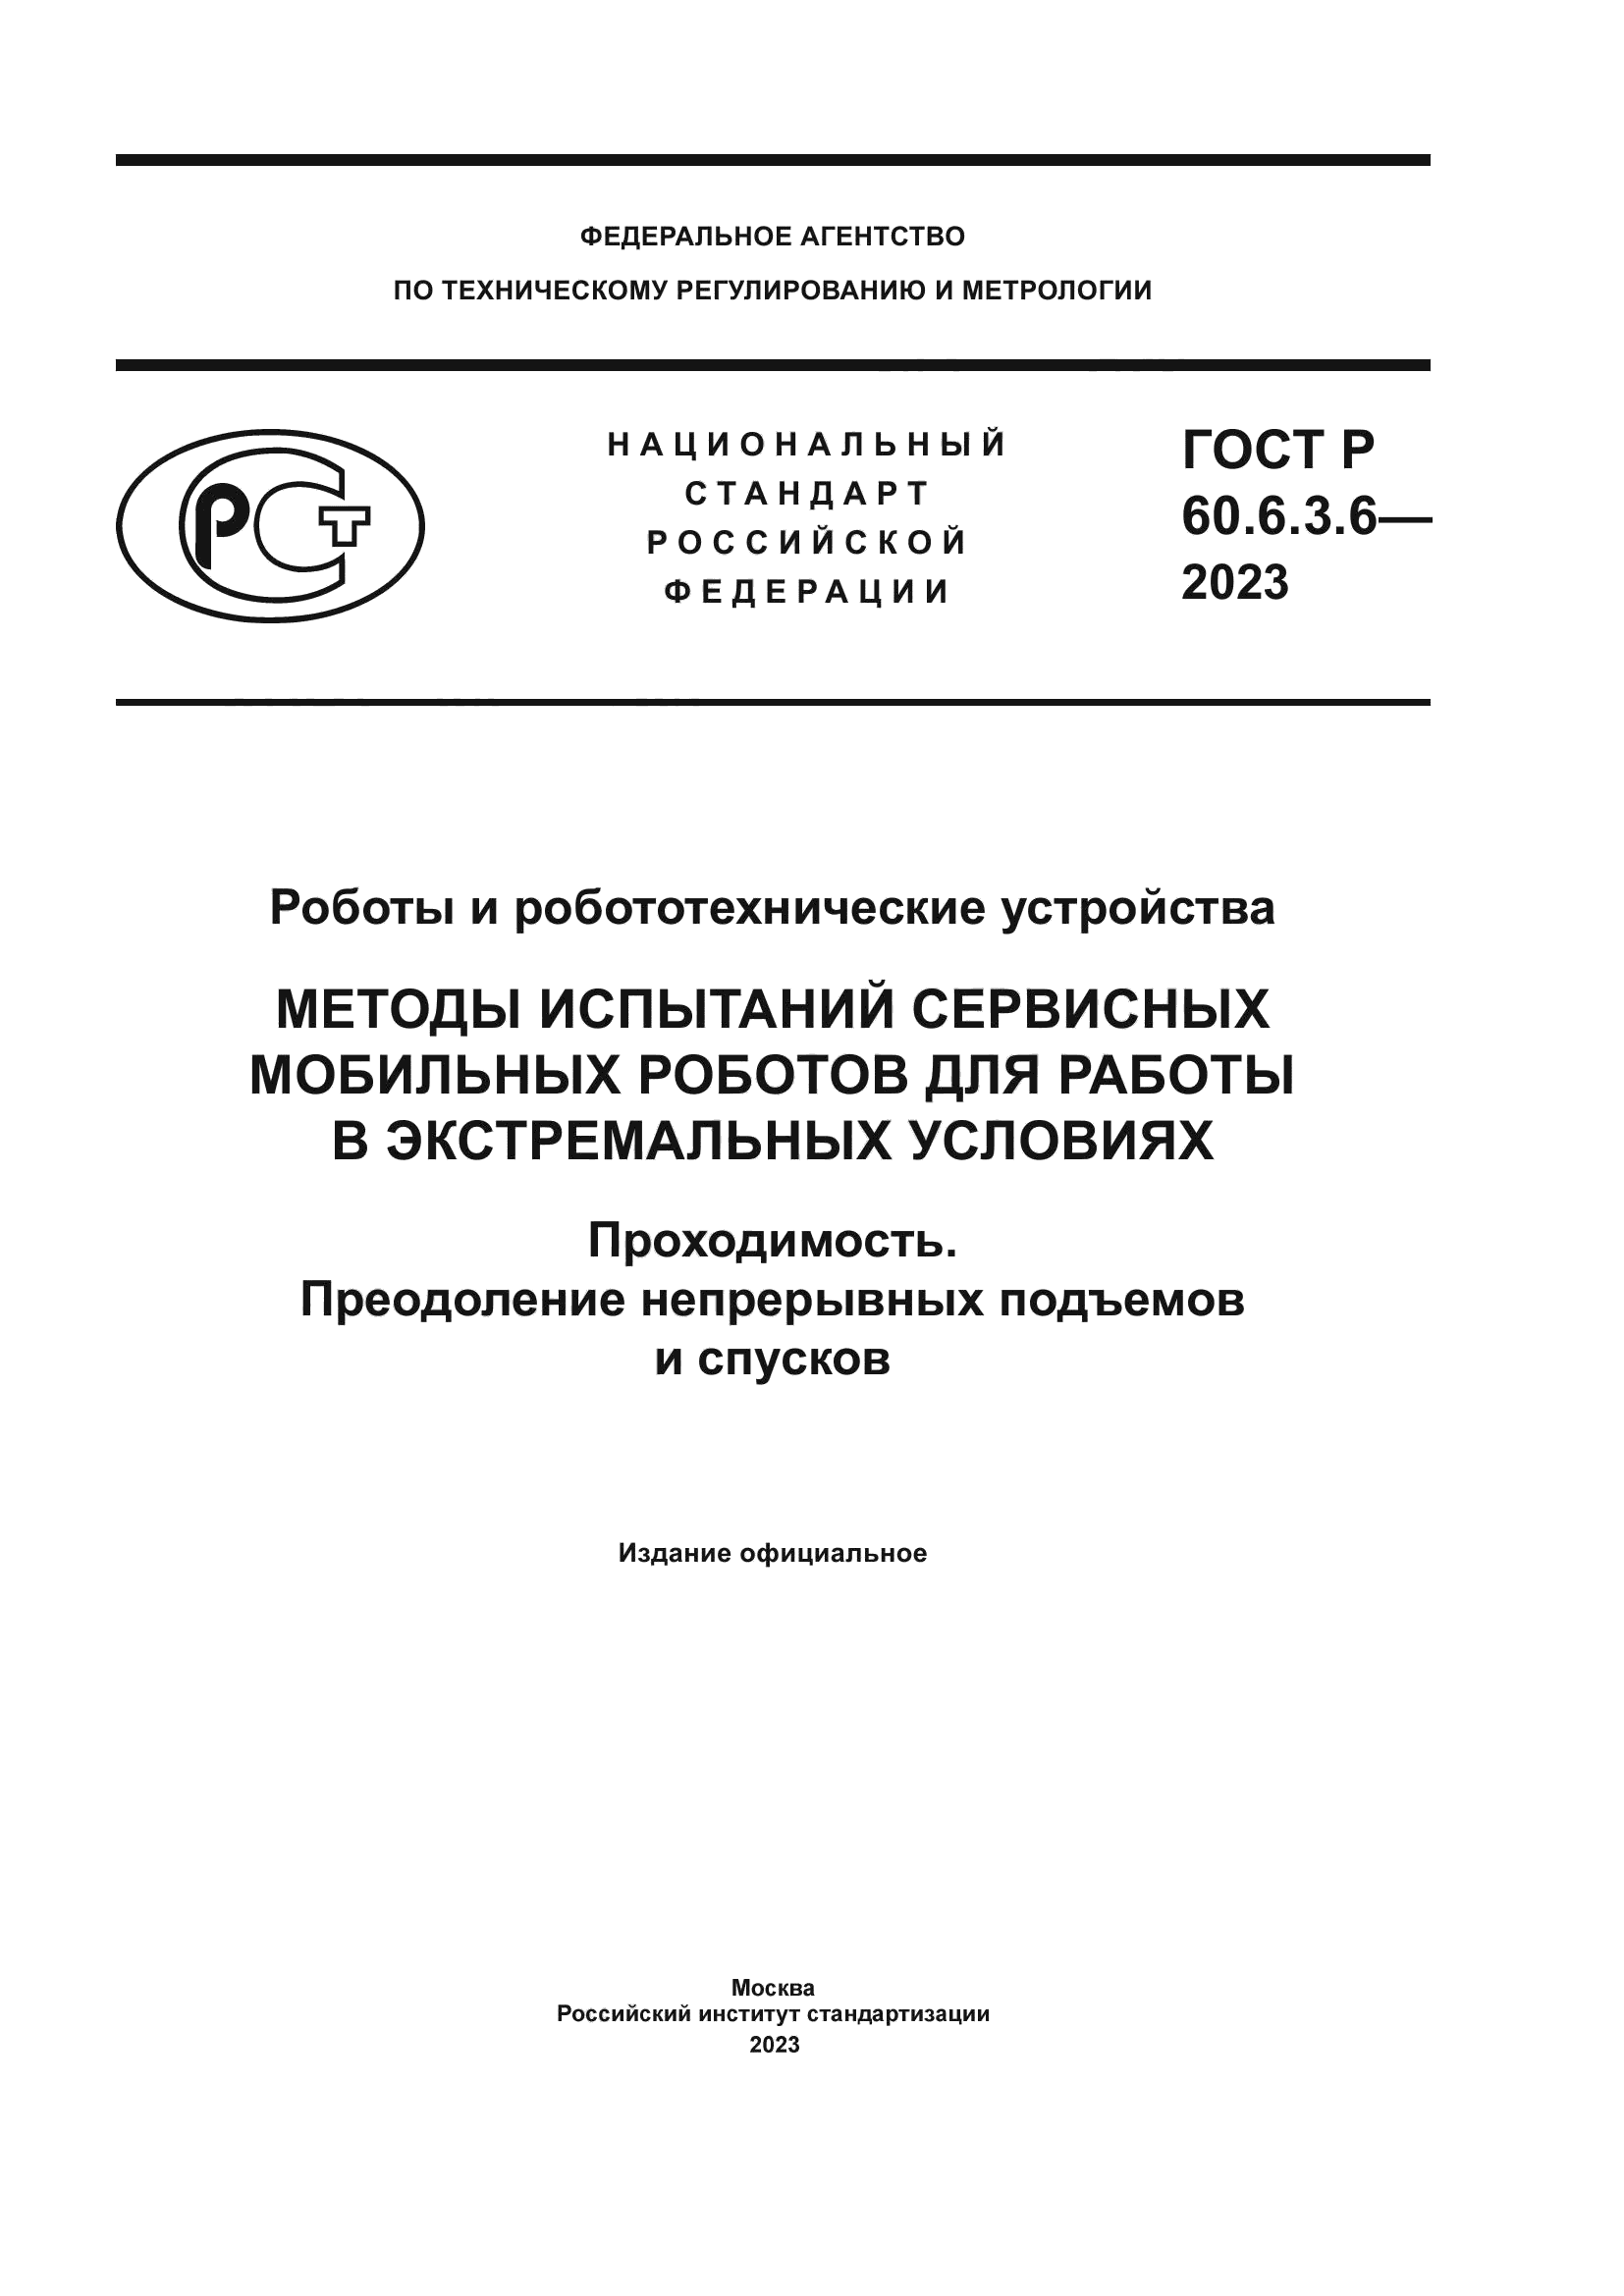 ГОСТ Р 60.6.3.6-2023